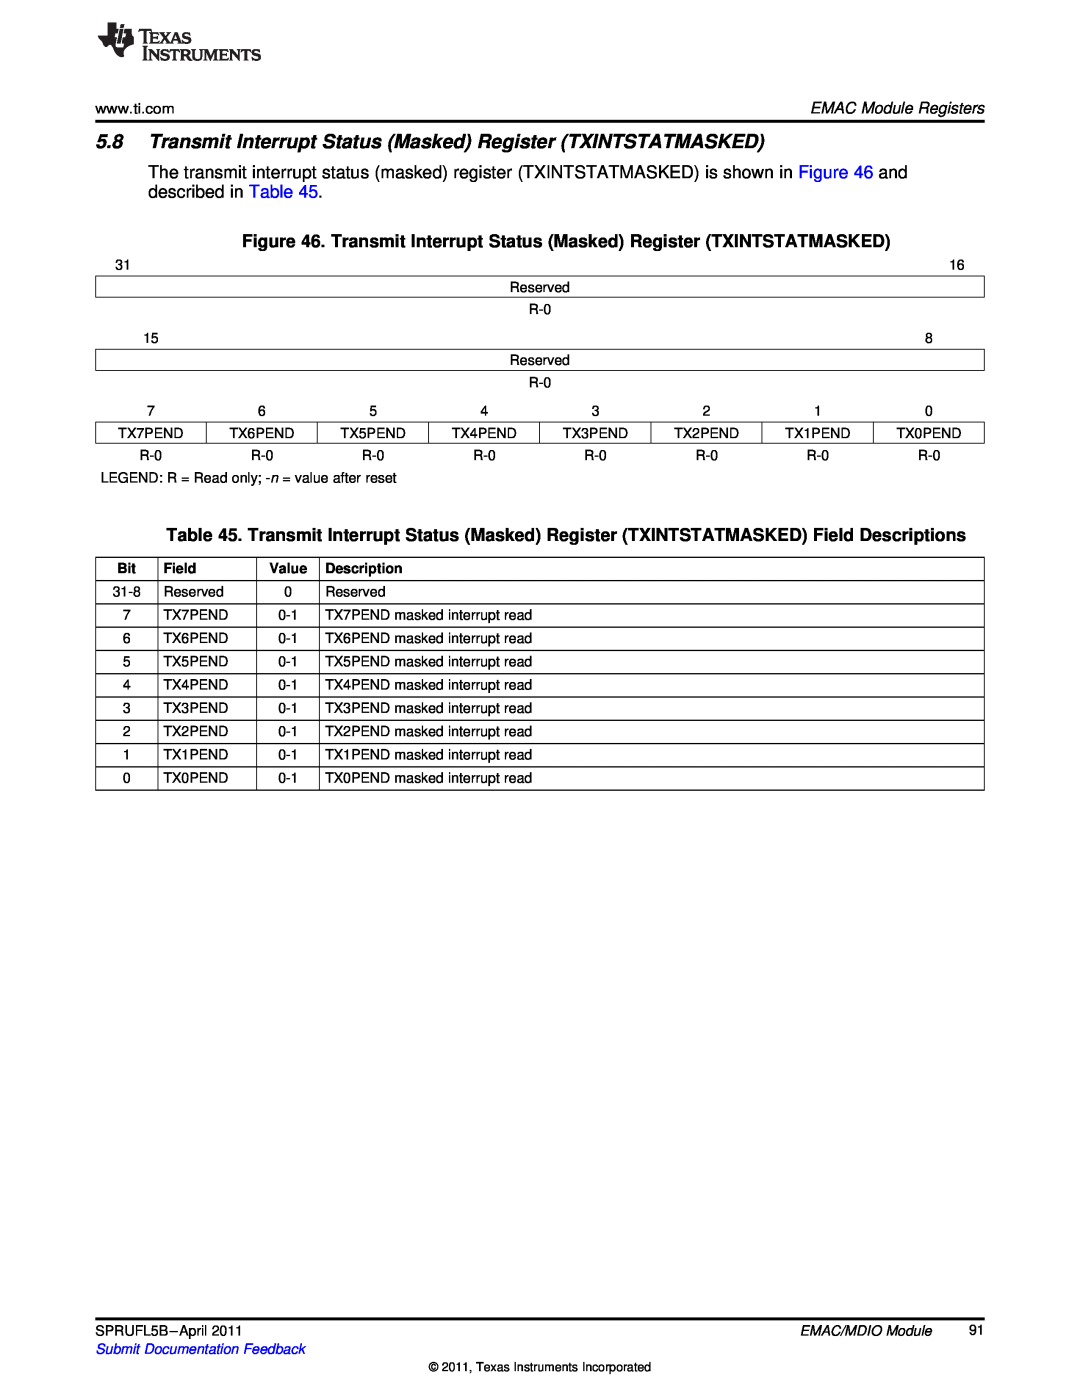 Texas Instruments TMS320C674X Transmit Interrupt Status Masked Register TXINTSTATMASKED, EMAC Module Registers, Field 